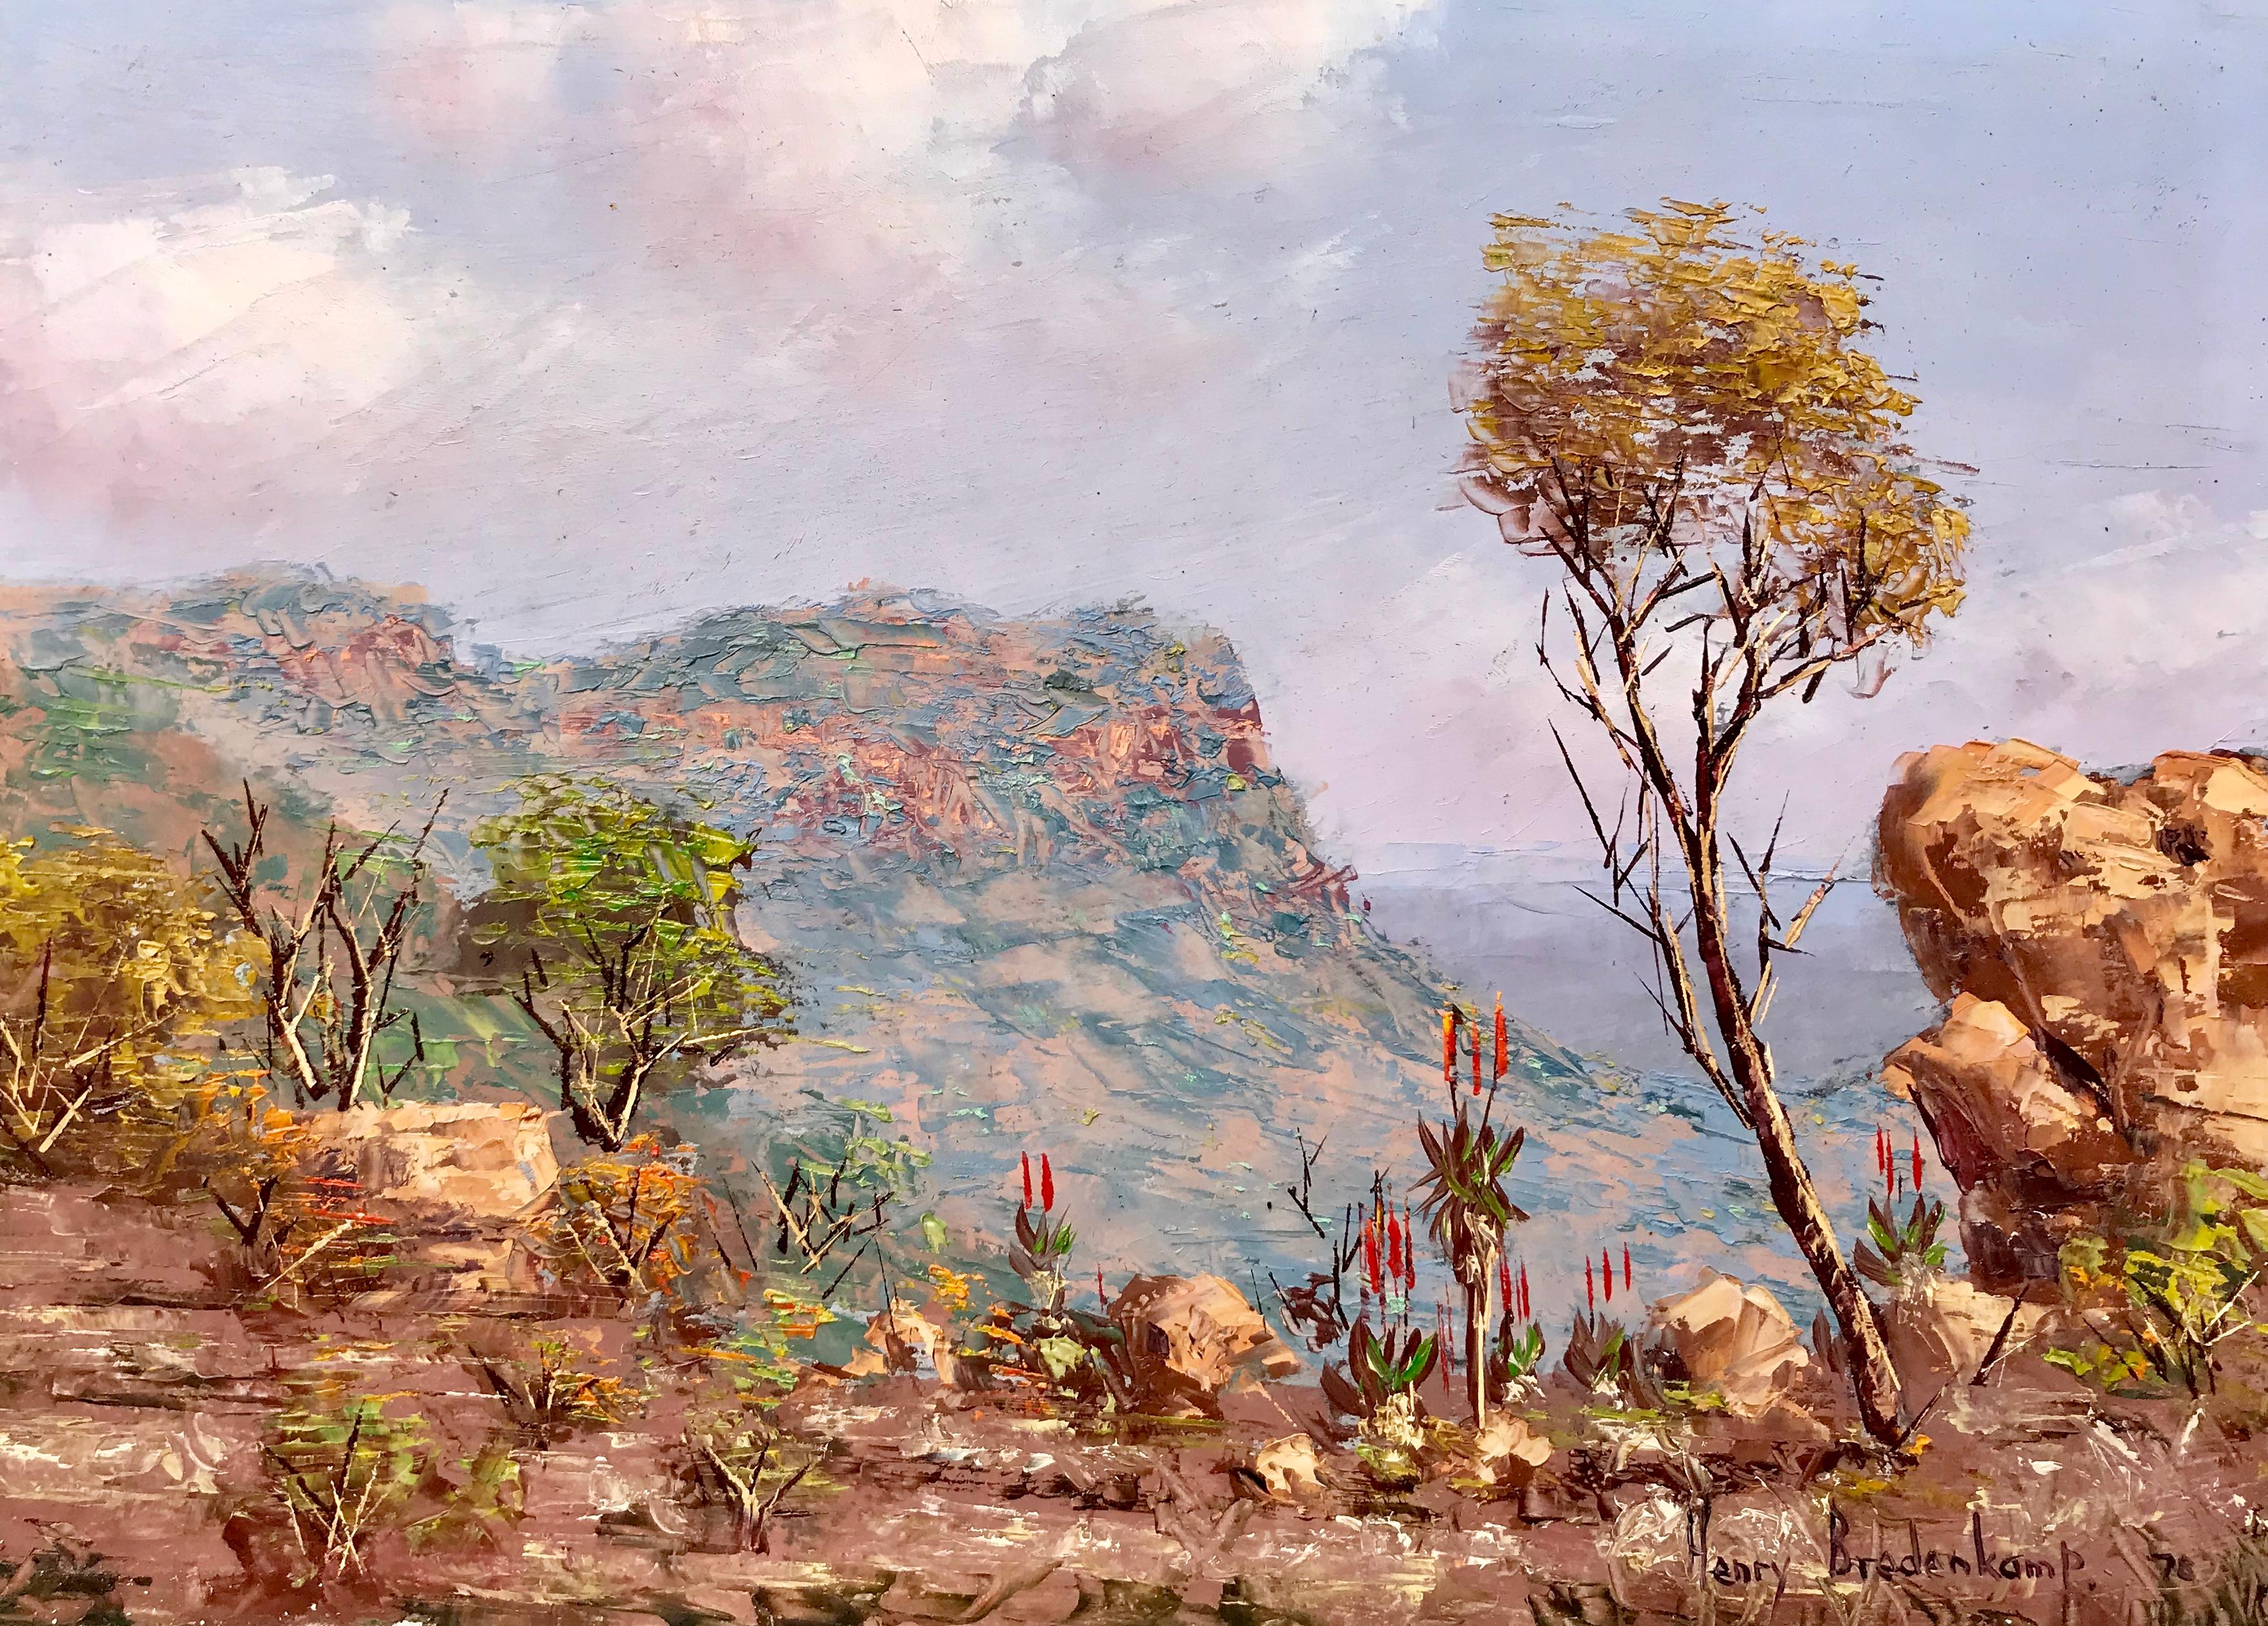 Henry Bredenkamp Landscape Painting - “God’s Window, South Africa”